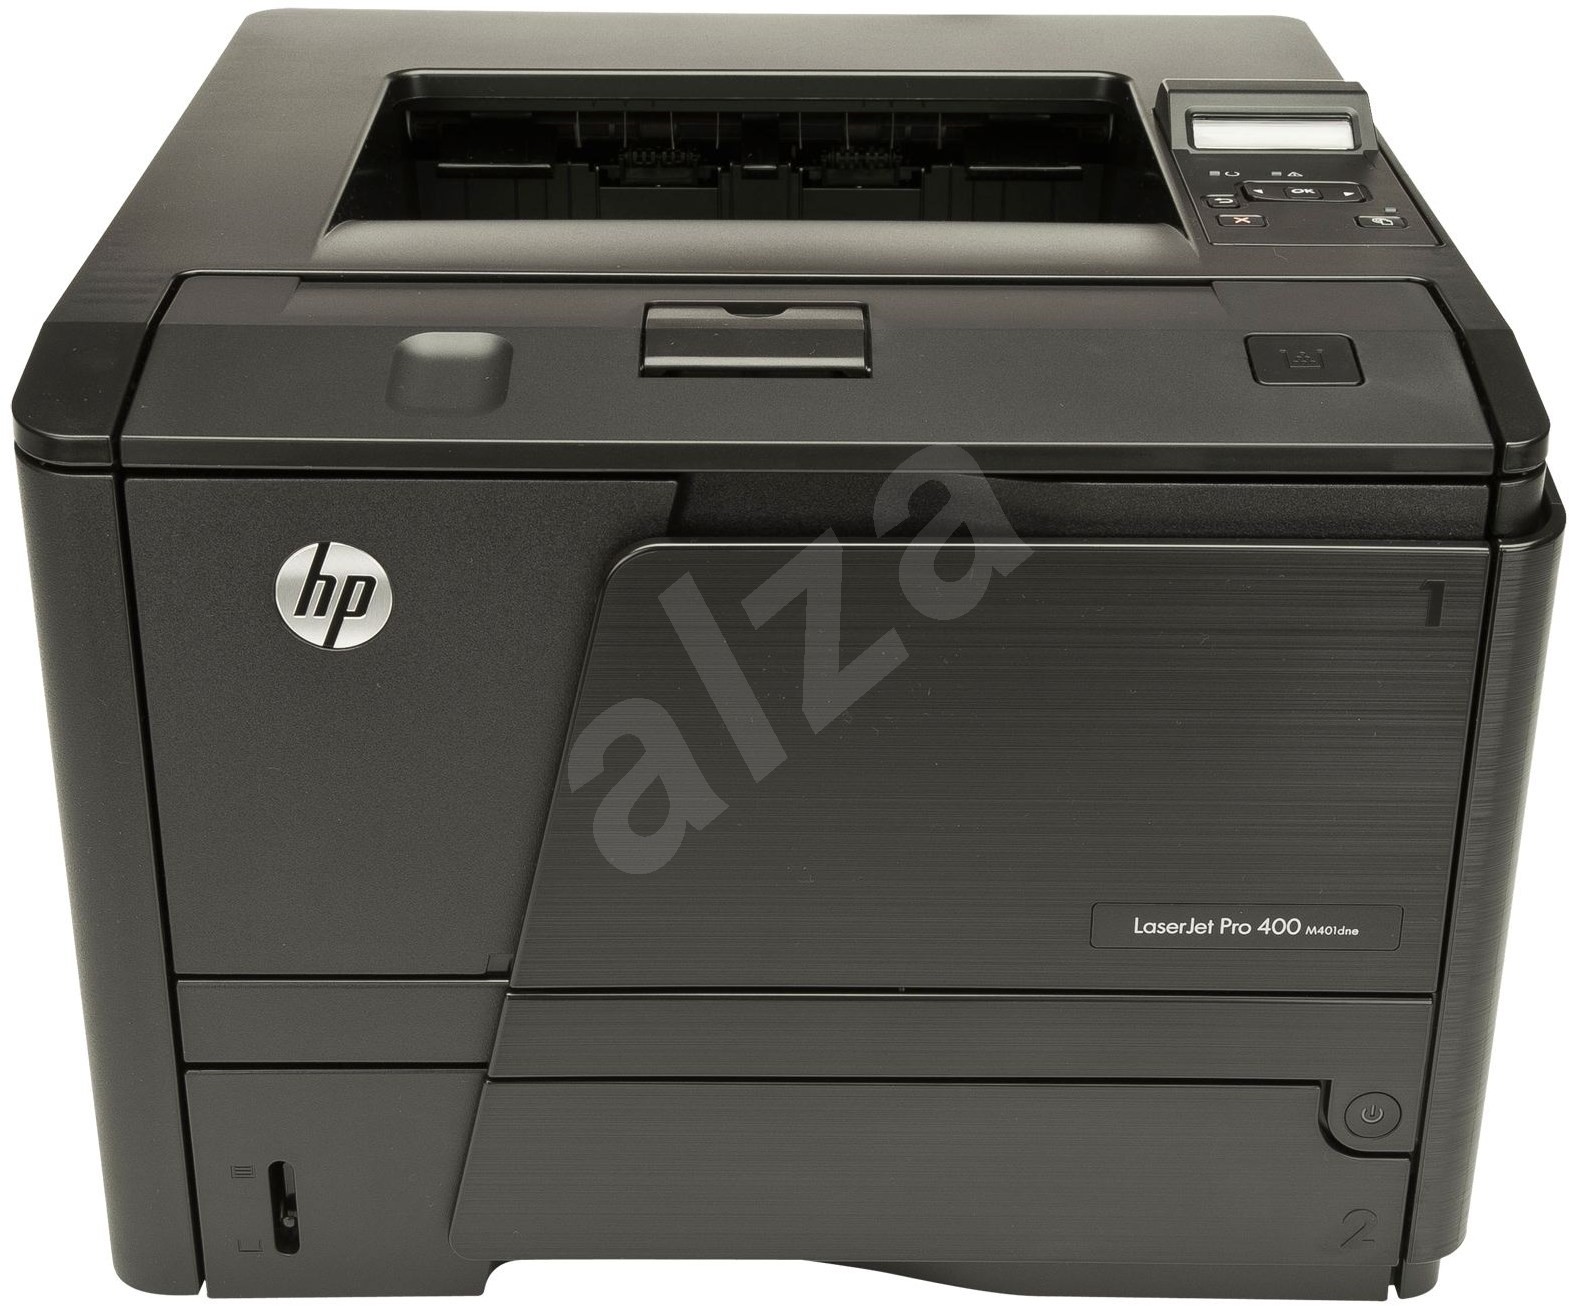 HP LaserJet Pro 400 M401dne | Alzashop.com